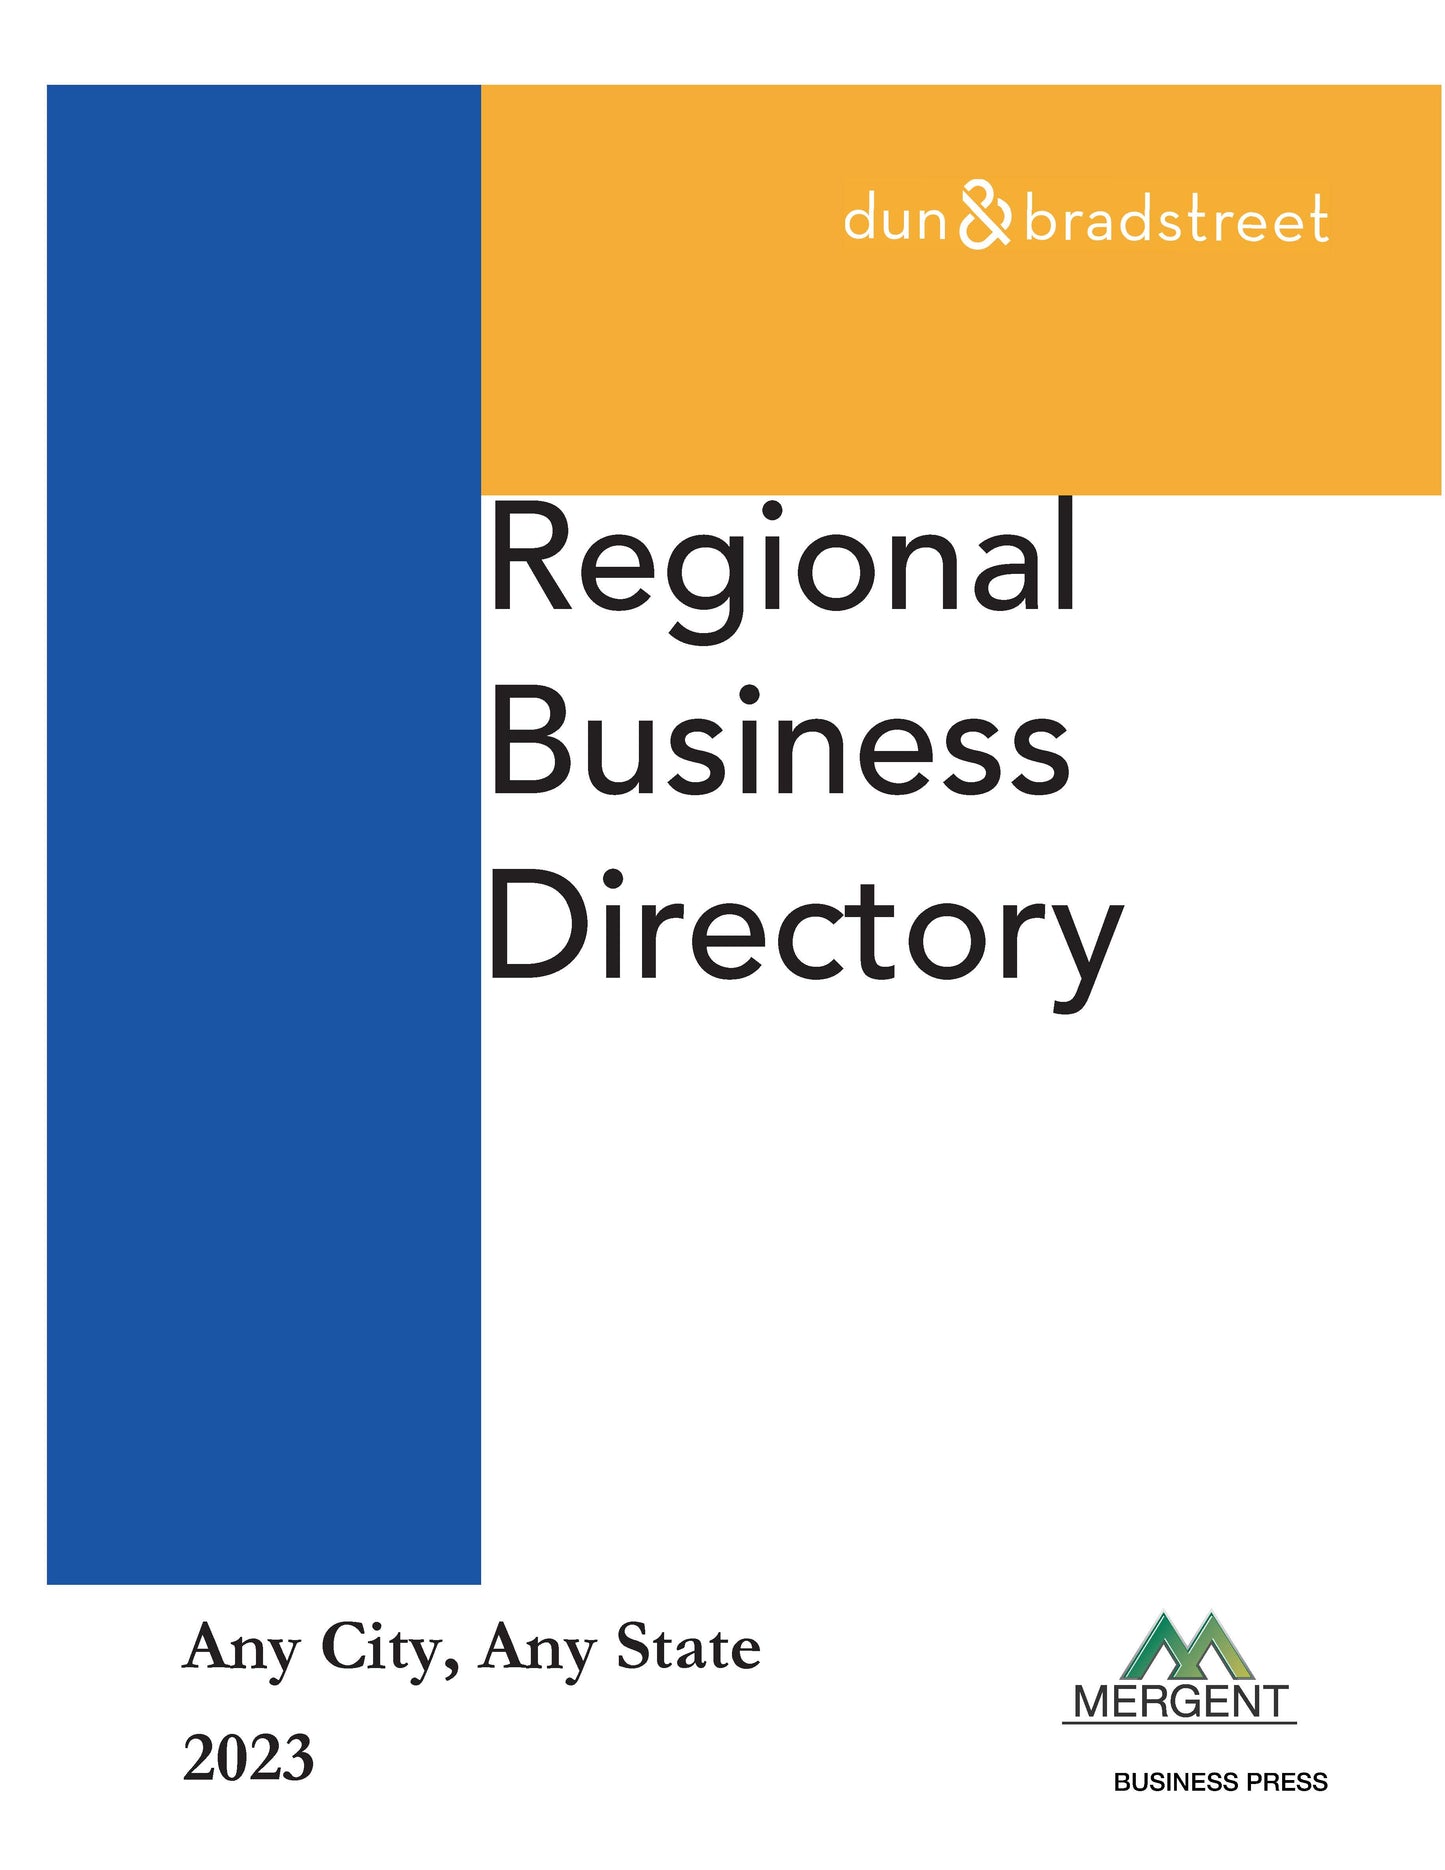 Regional Business Directory - Dallas/Ft. Worth, TX